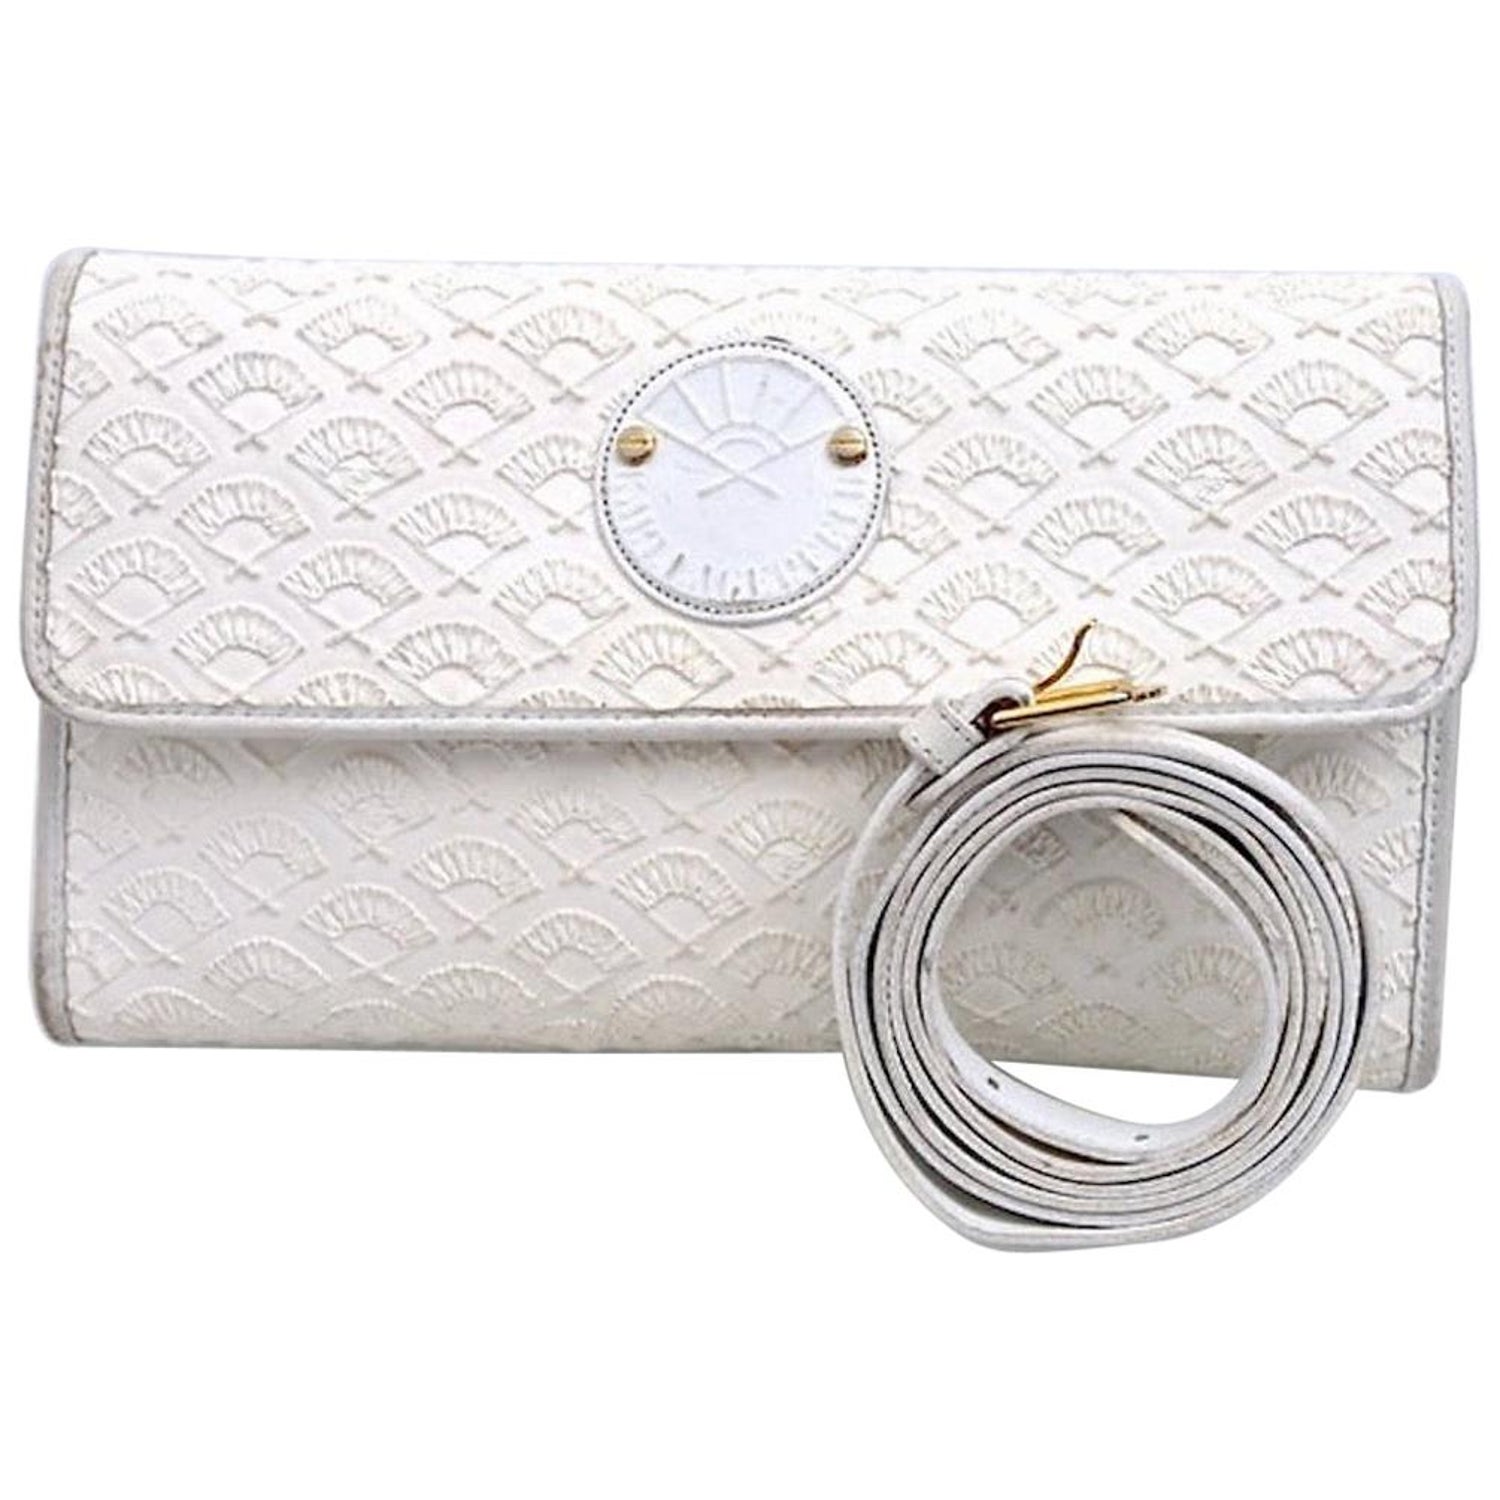 CHANEL Caviar Wallet On Chain WOC Double Zip Chain Shoulder Bag